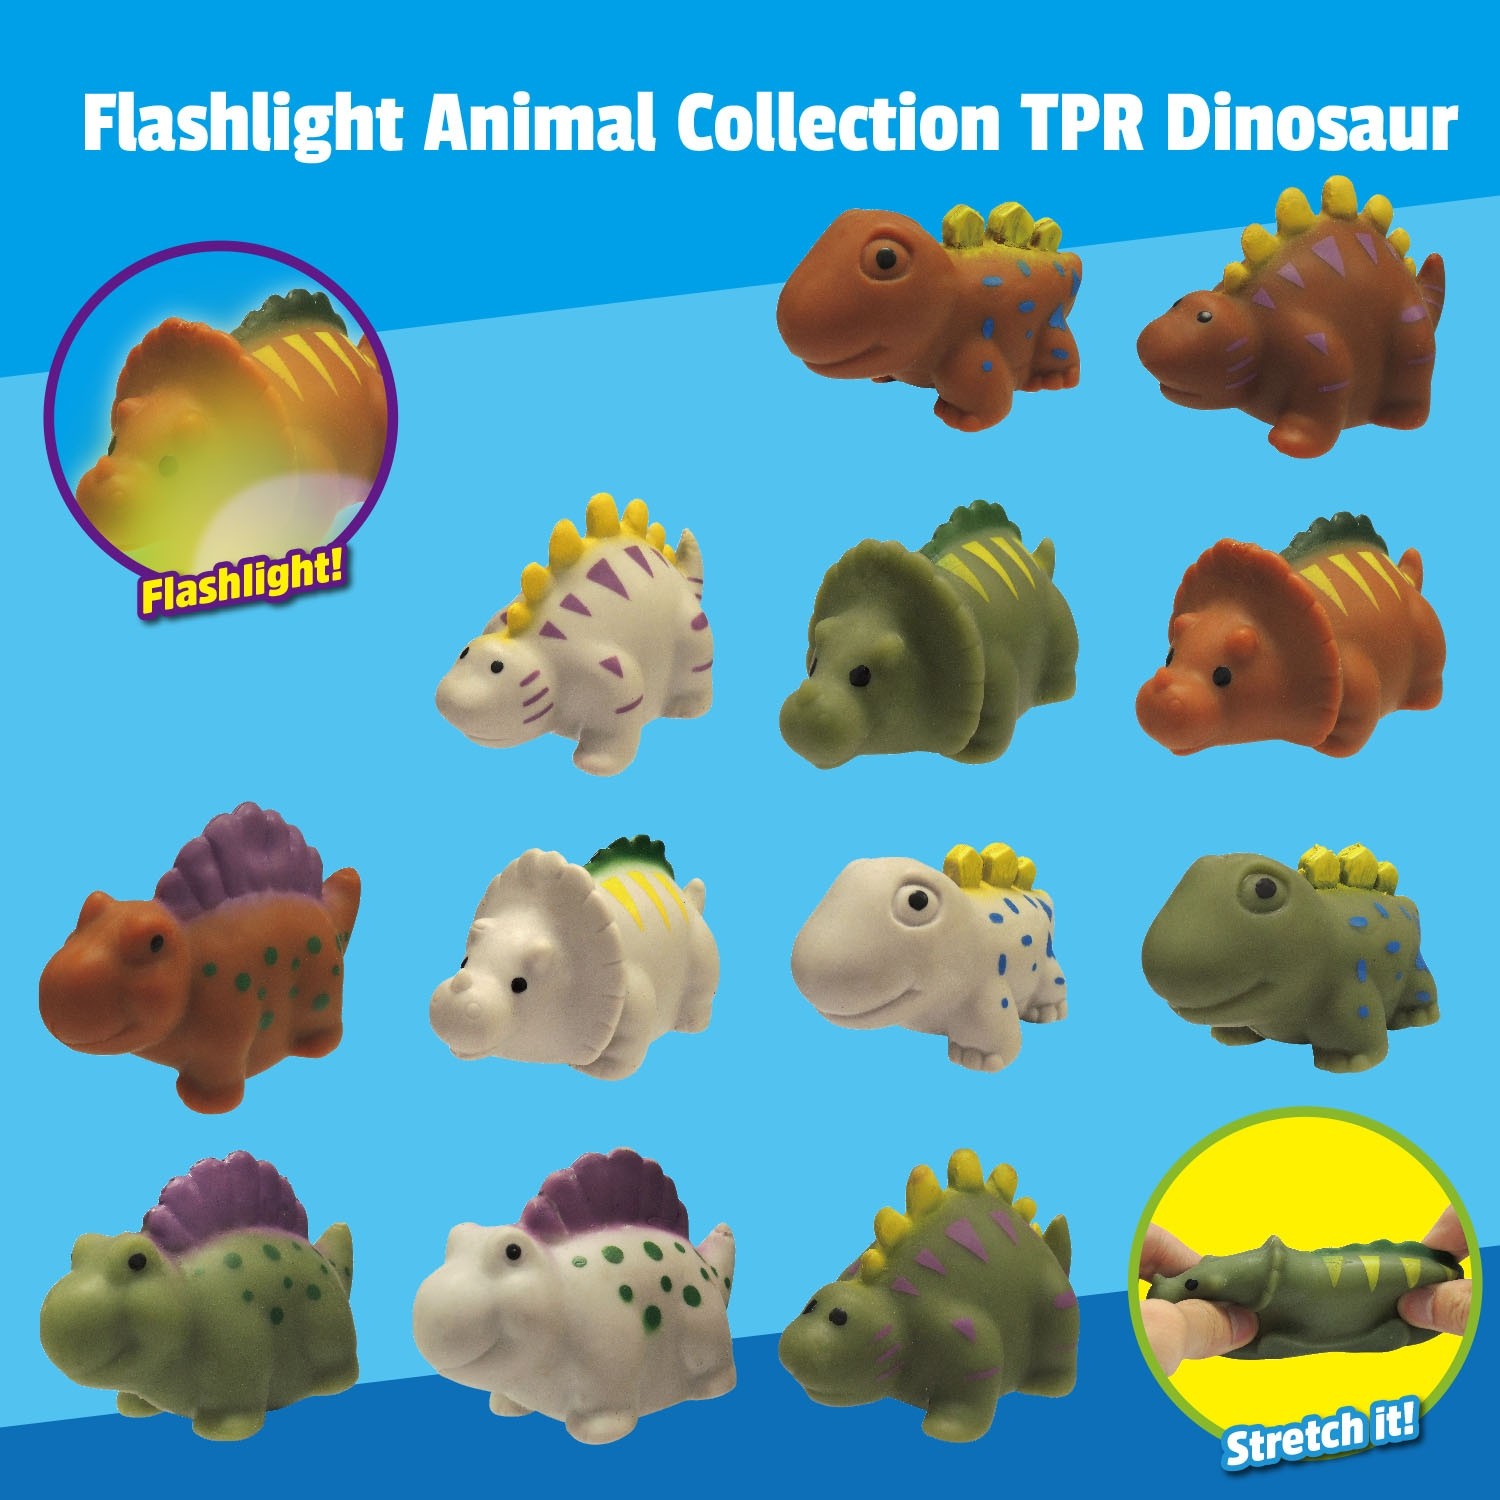 "Flashlight Animal Collection" TPR Dinosaur